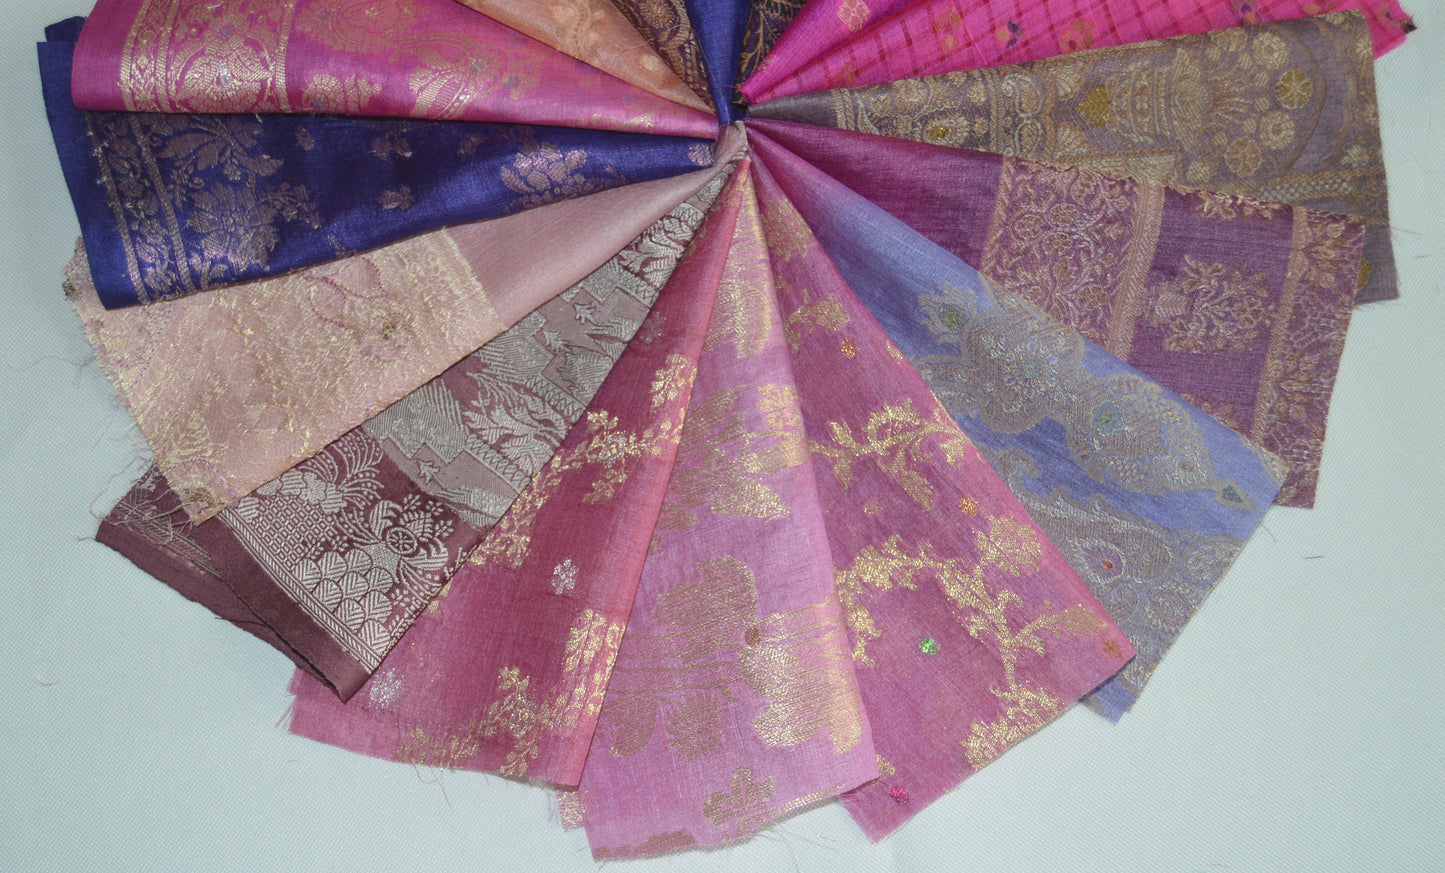 10 Inch x 16 Pieces Pink Purple Recycled Vintage Silk Sari Scraps Brocade Craft Fabric Collage Mixed Media Textile Art Junk Journals